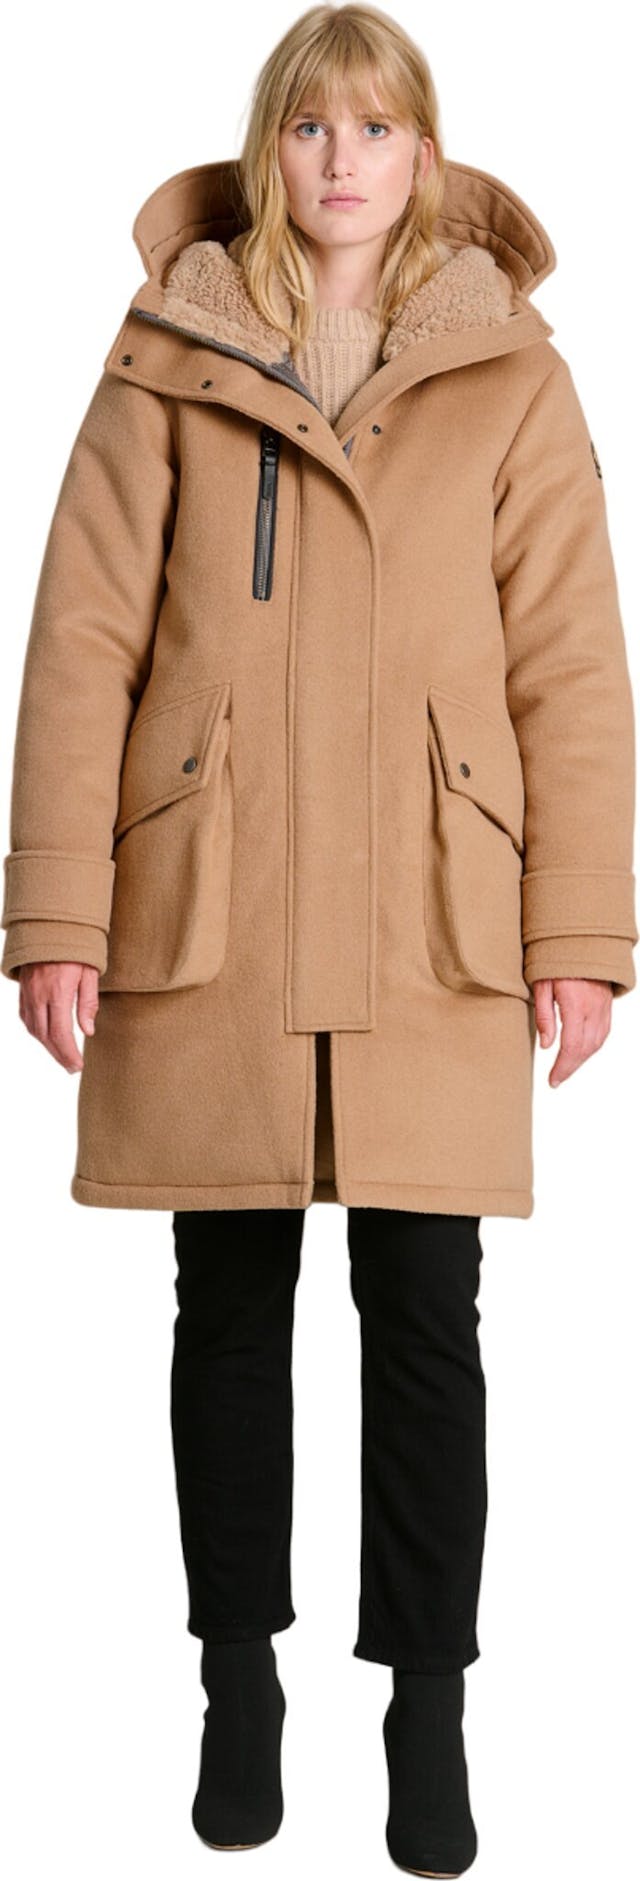 Product image for Mahikan Winter Jacket - Women's